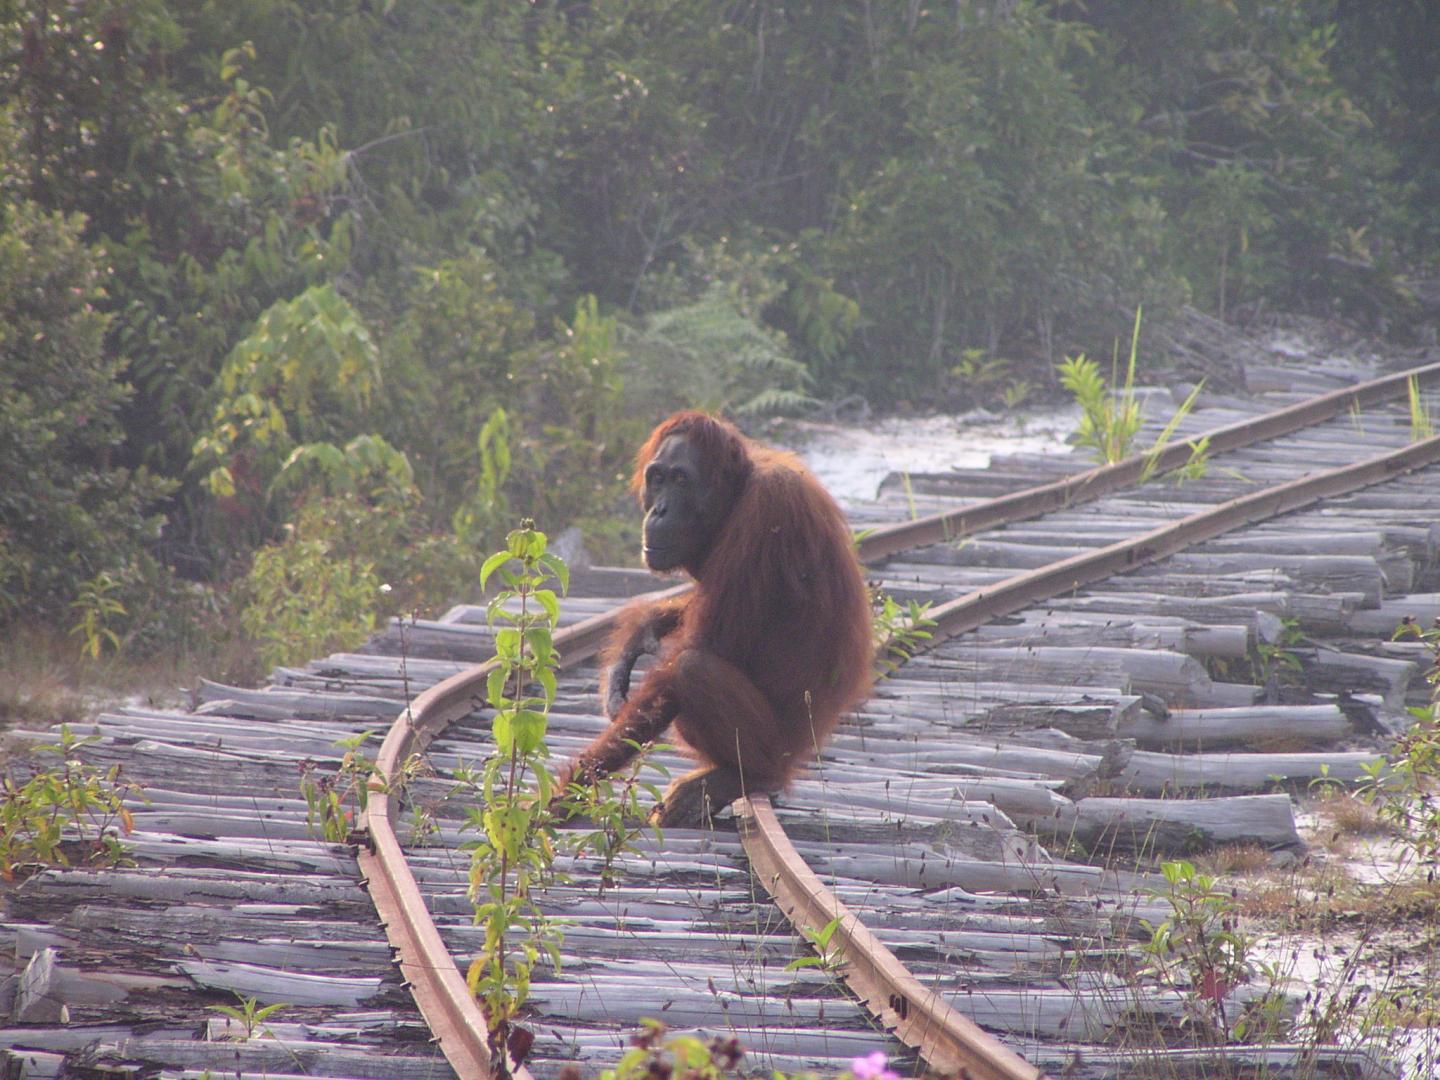 Orangutan Sitting on the Train Tracks